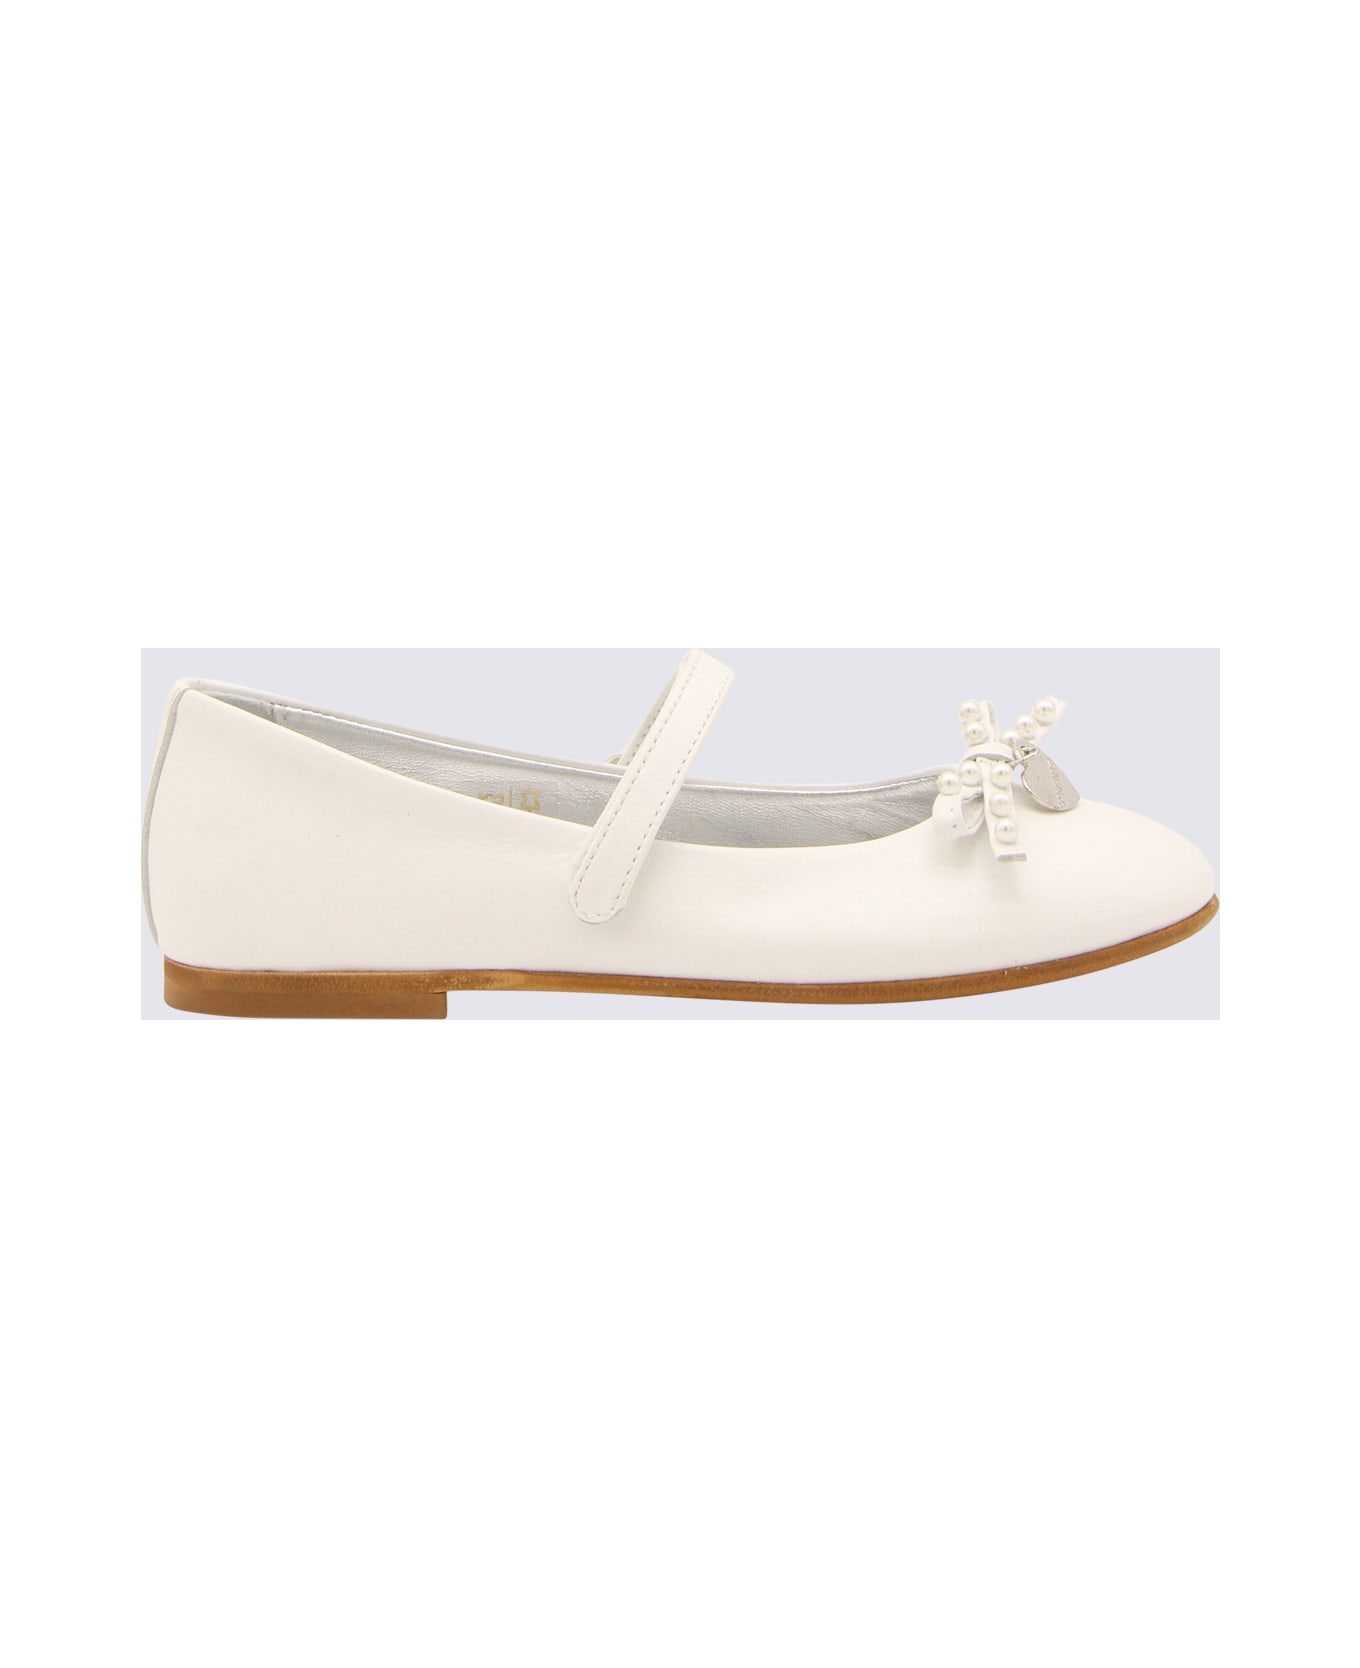 Monnalisa White Leather Flats - Cream シューズ